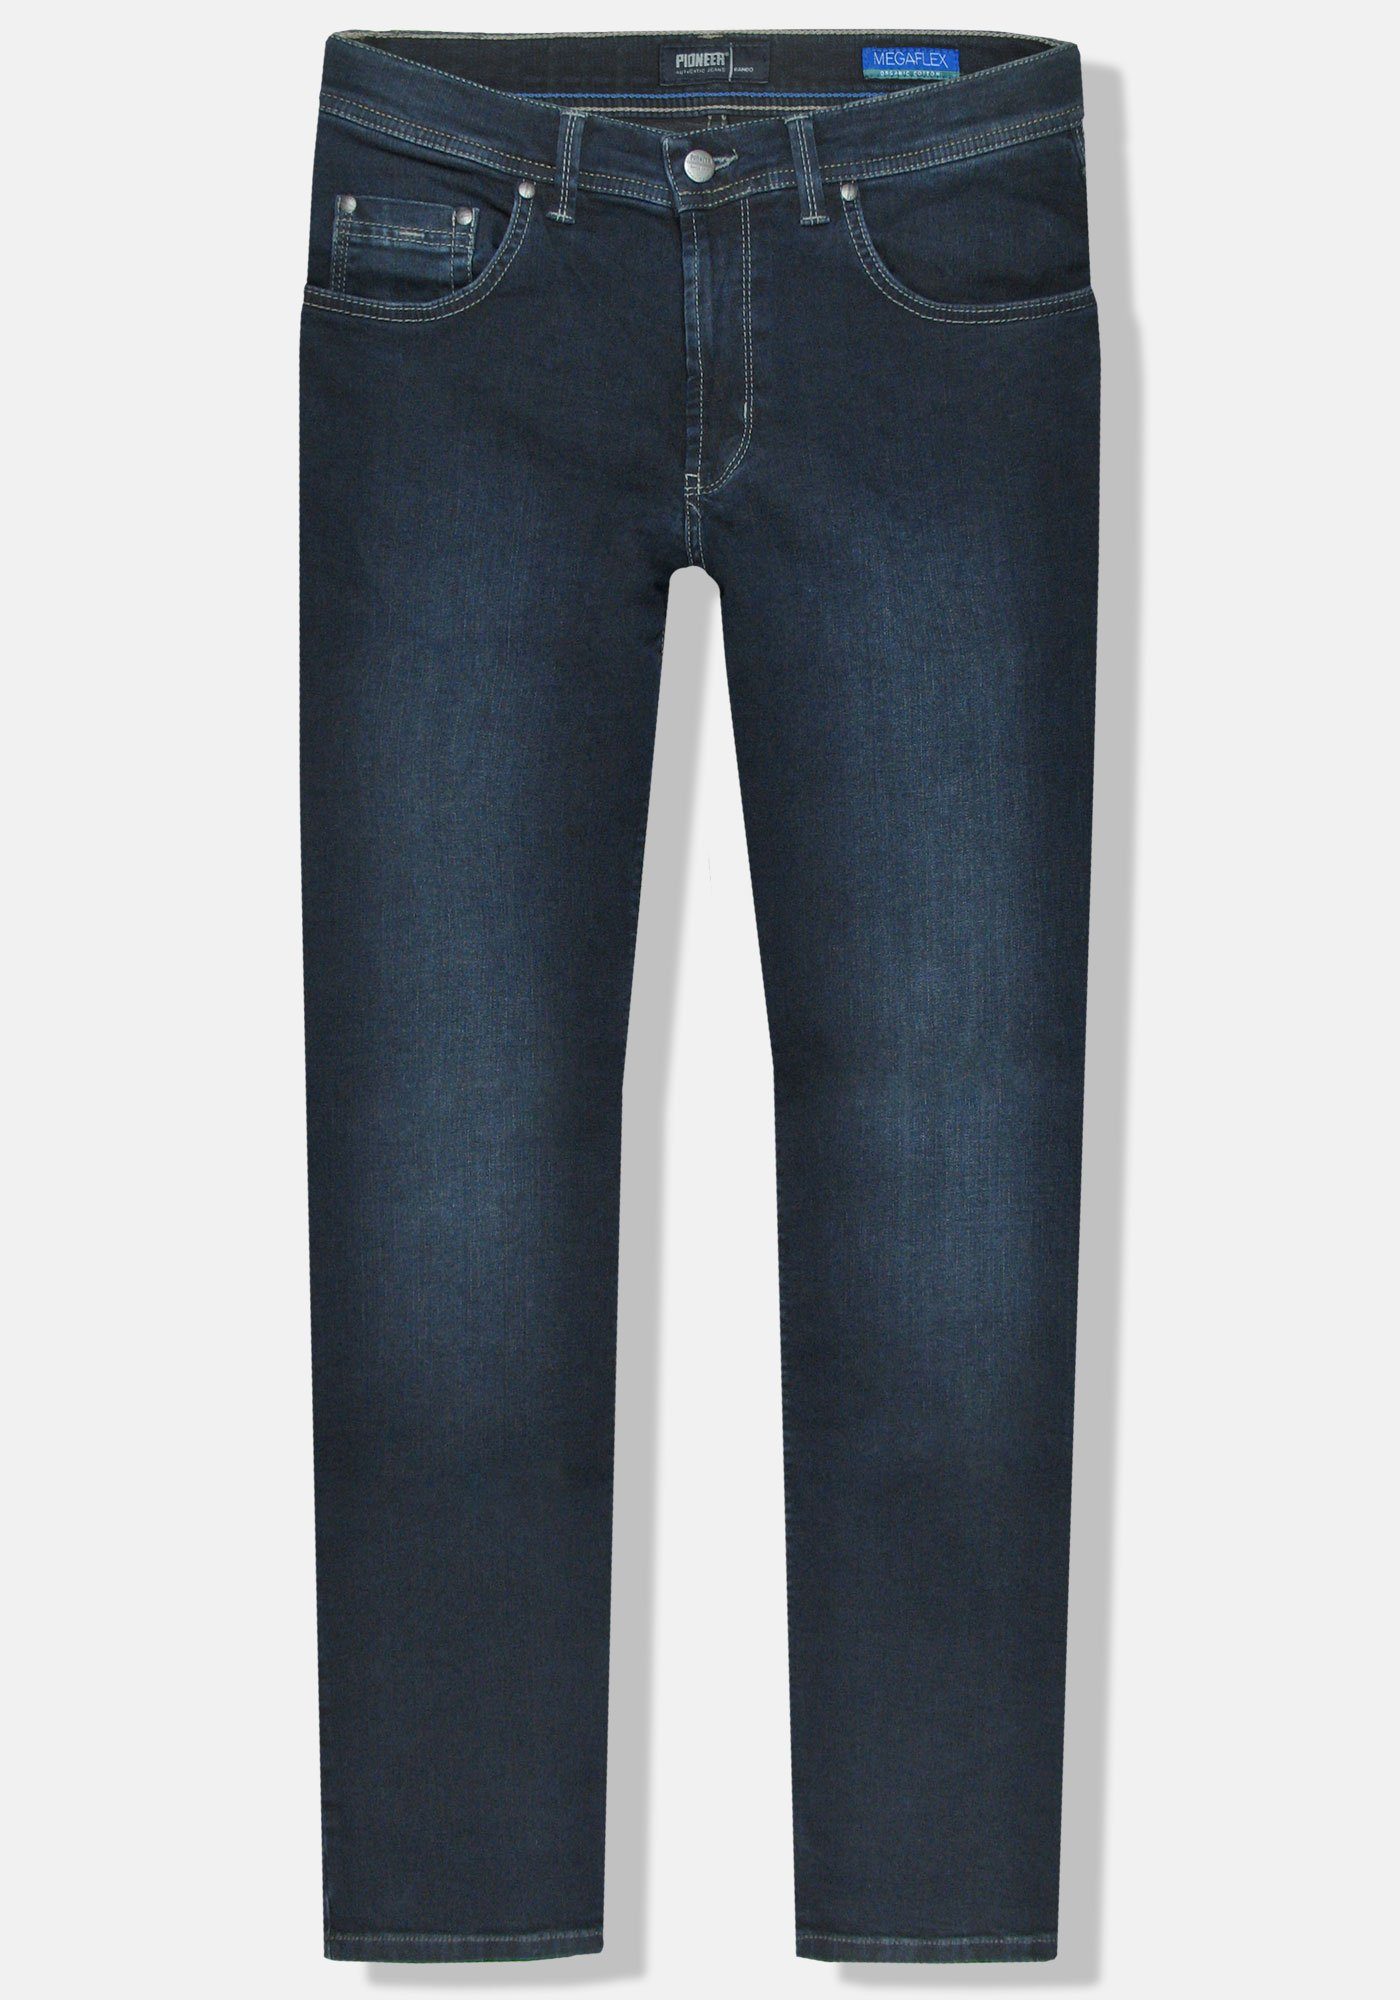 Stretch-Denim Pioneer Used Authentic 5-Pocket-Jeans Rando Jeans Blue Megaflex Night